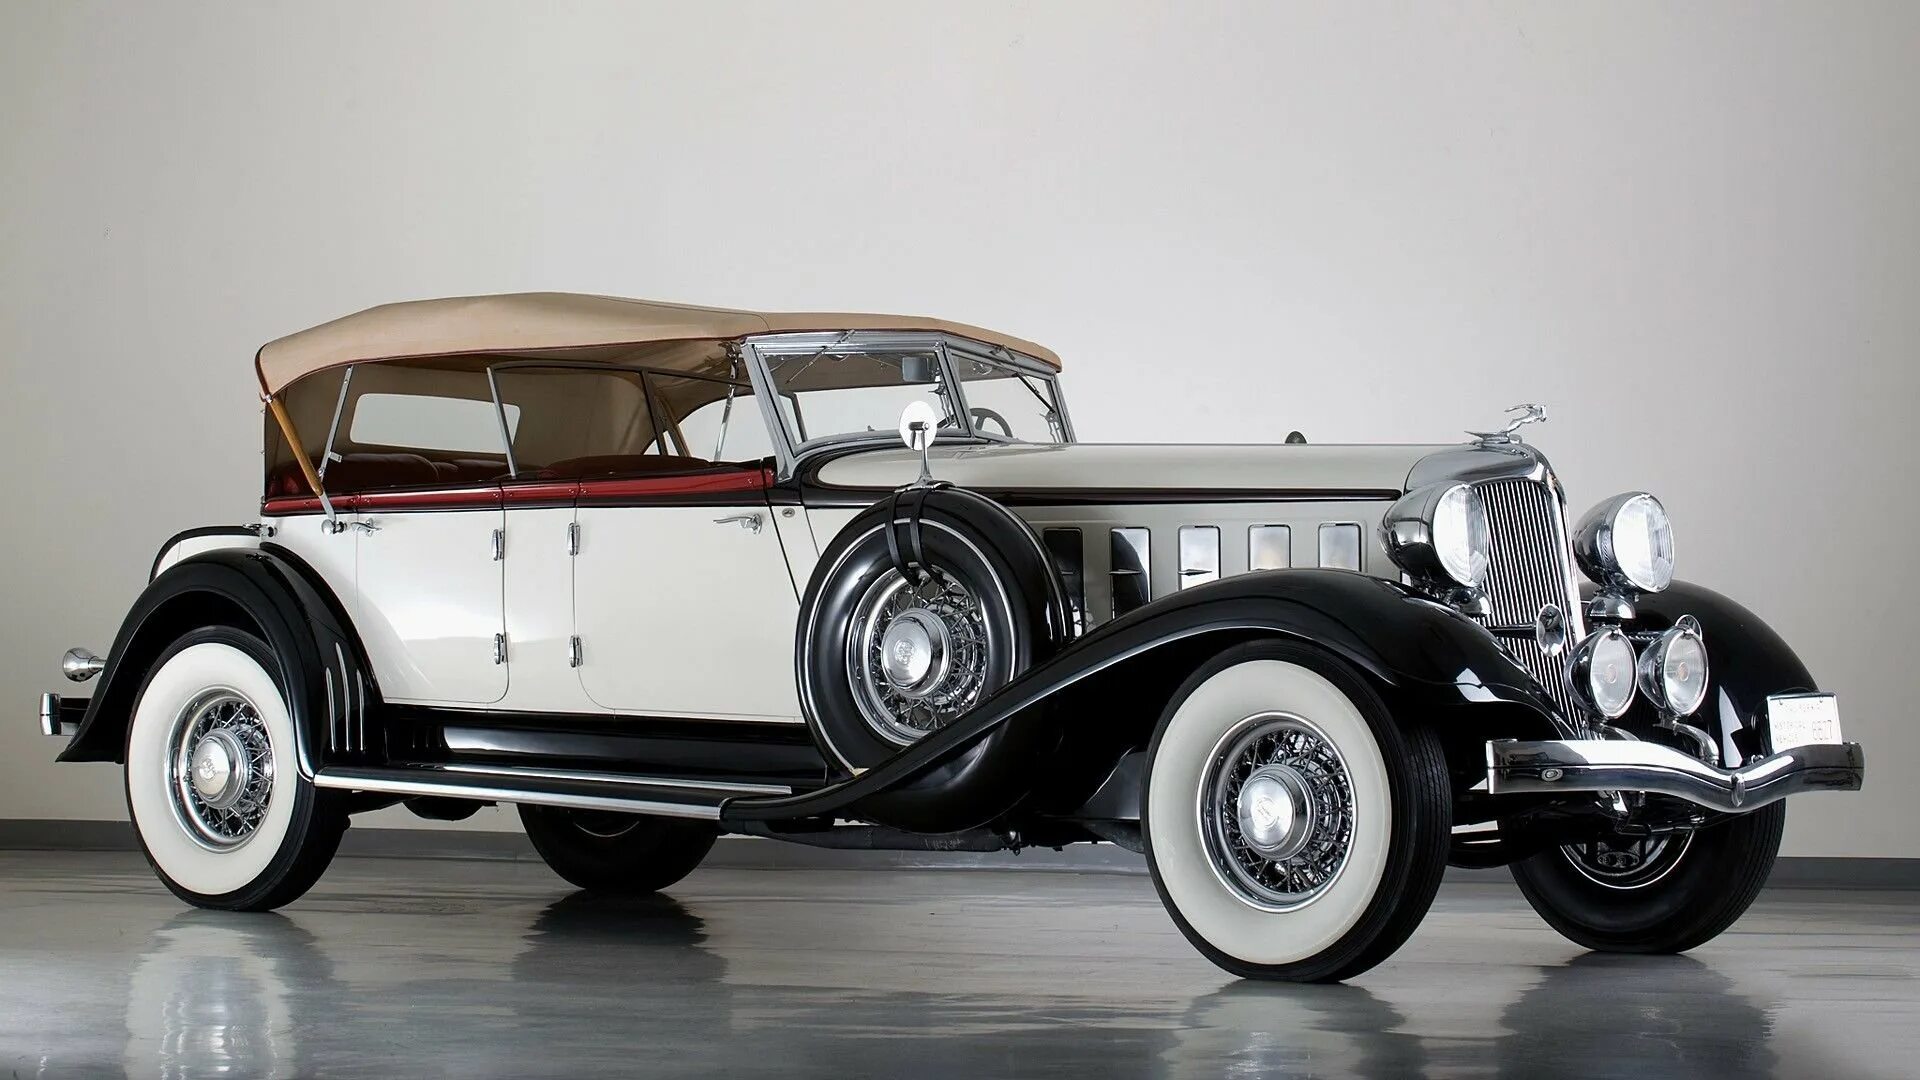 Роллс Ройс 1920. Chrysler Imperial 1933. Chrysler CL Imperial 1933. Chrysler Imperial Phaeton. Зикерт автомобиль